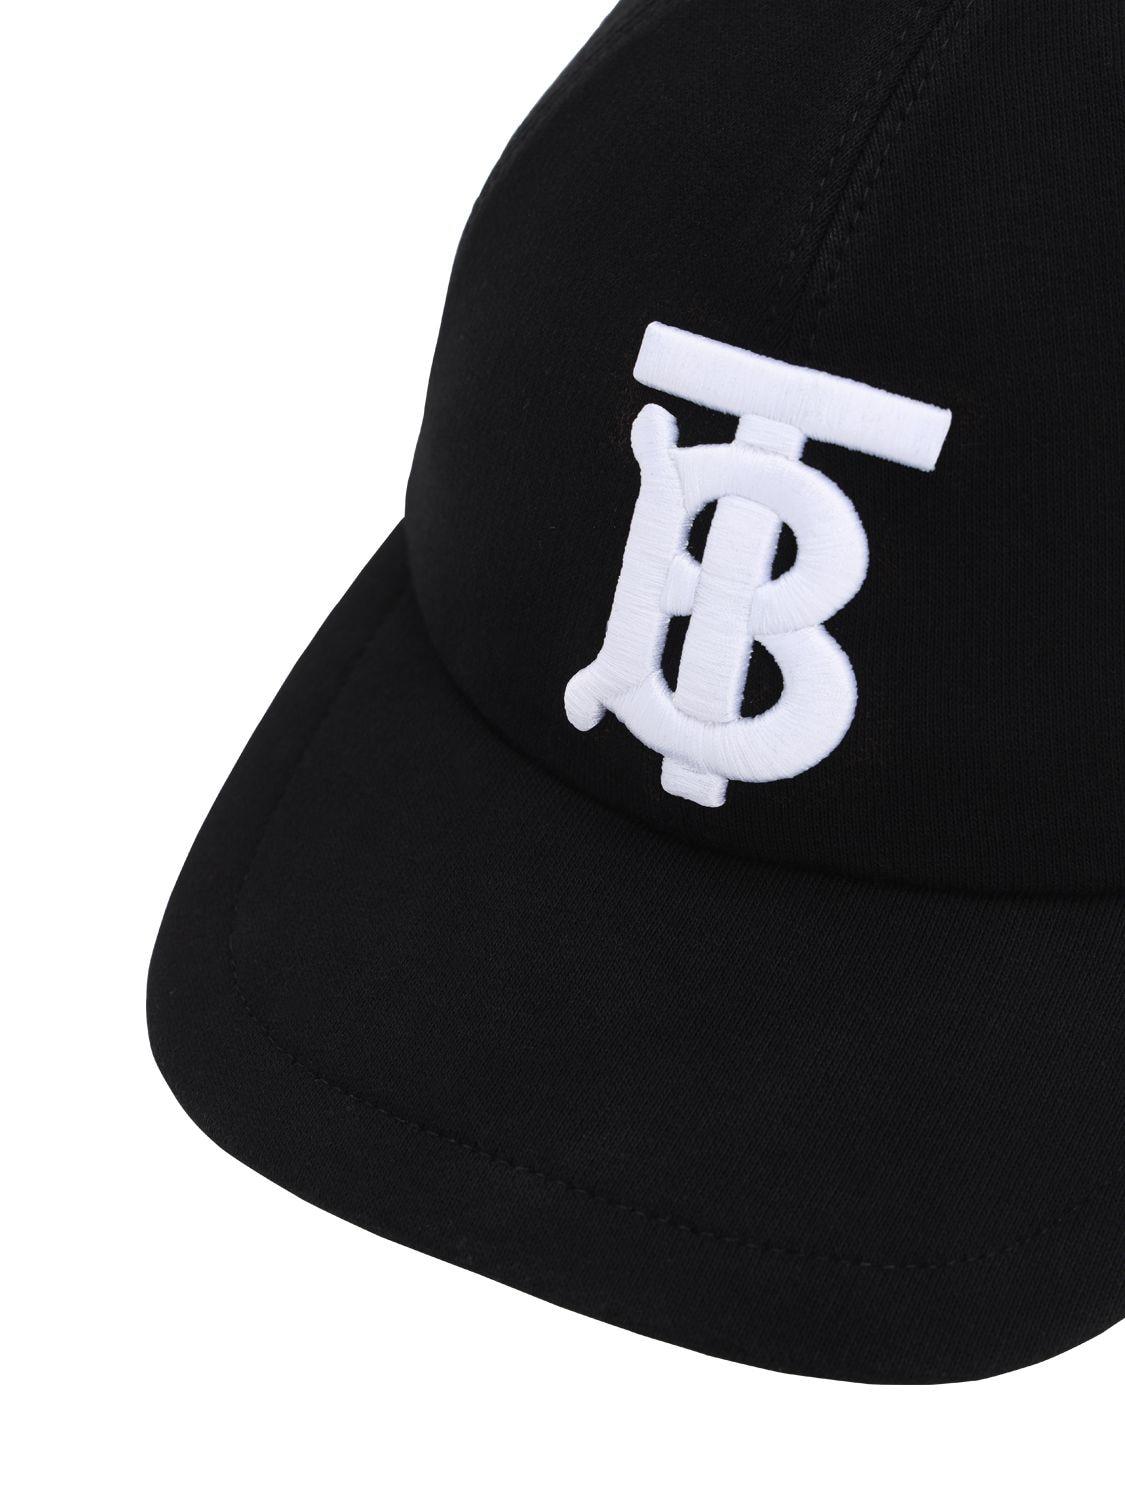 Burberry Tb Logo Cotton Canvas Baseball Hat in Black - Lyst